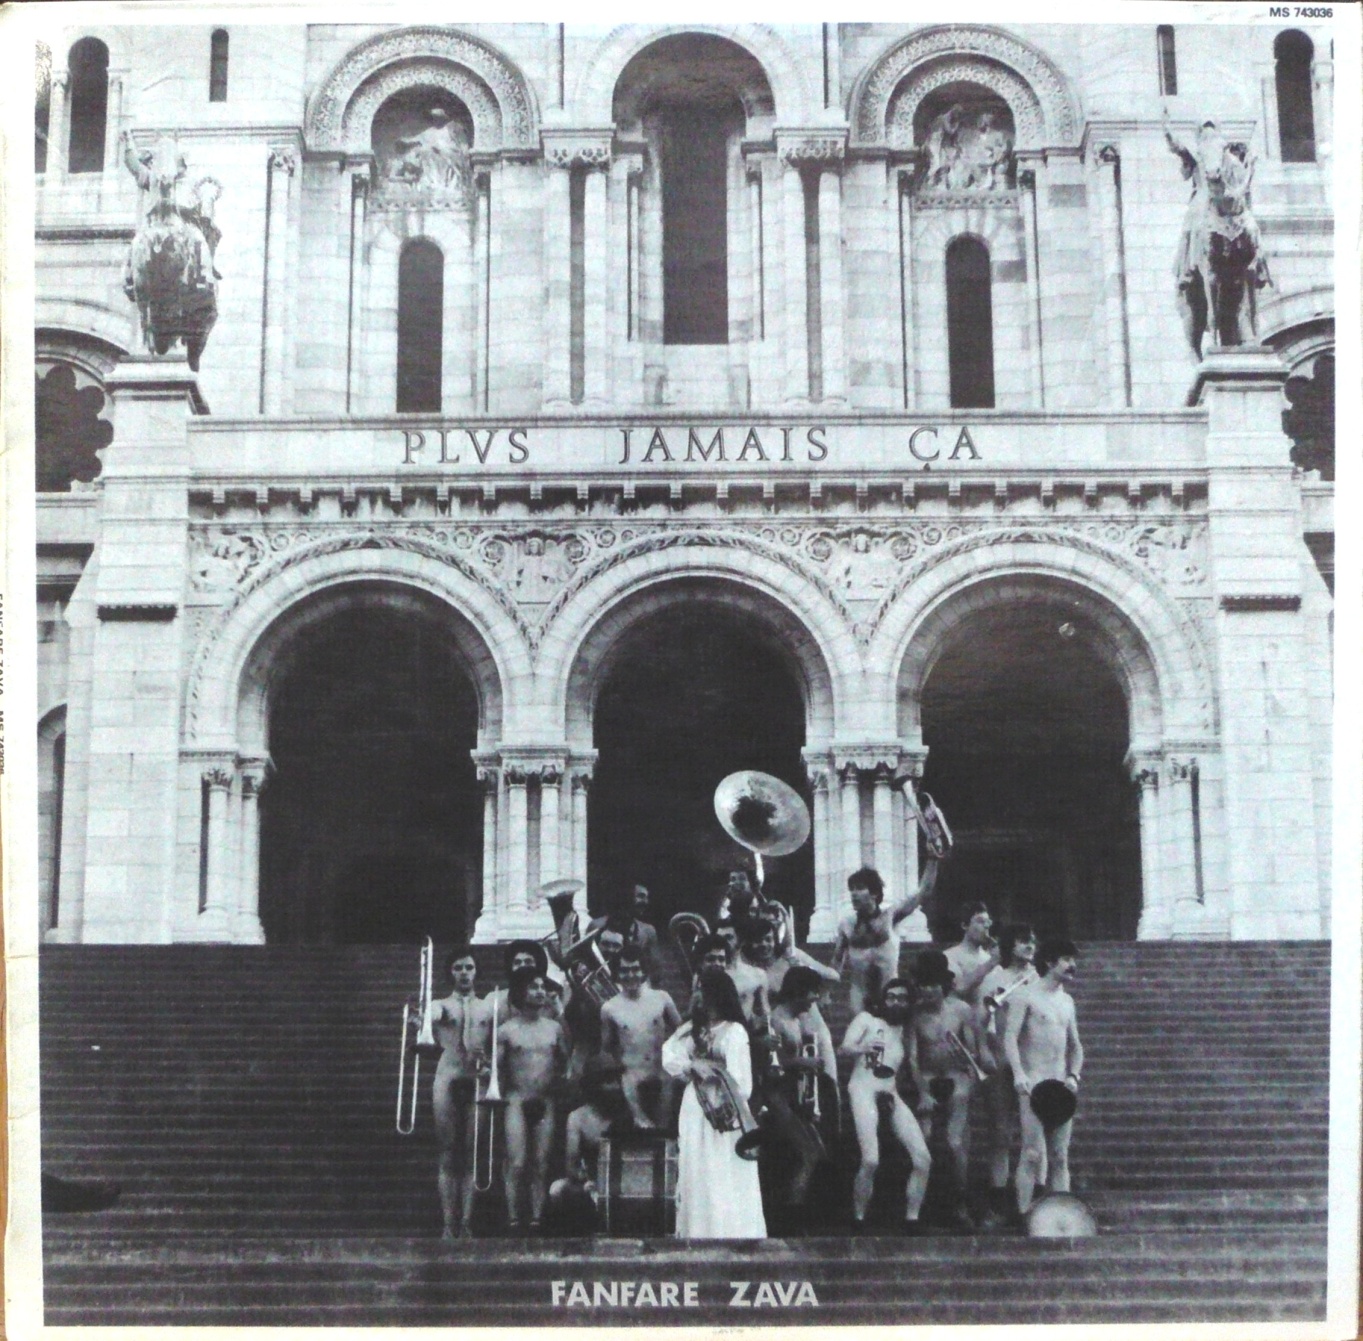 1974 : Fanfare Zava “Plus jamais ça” – pochette recto